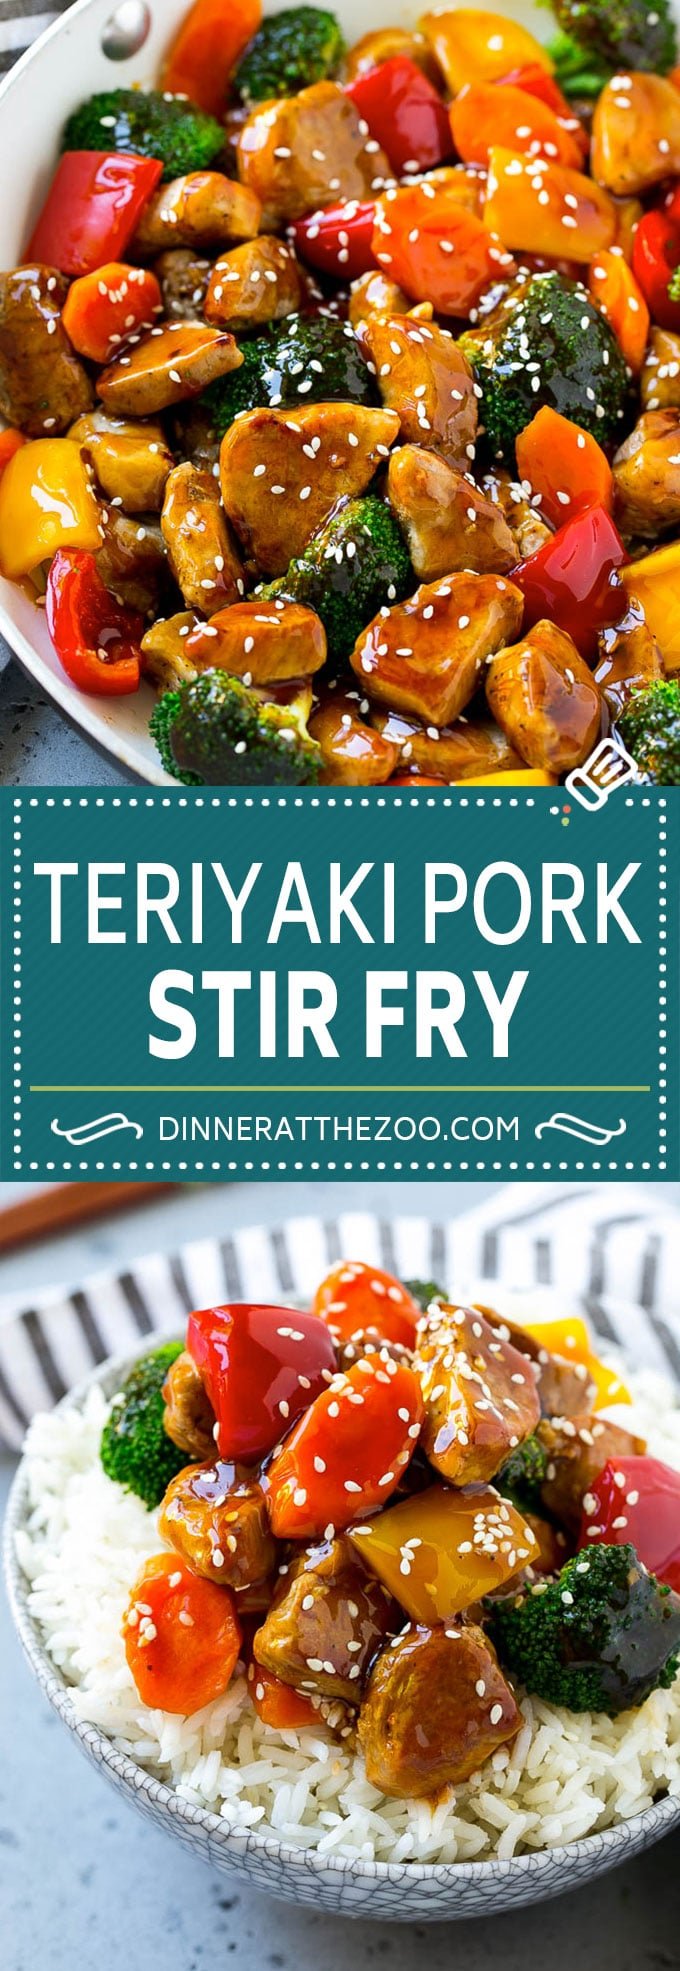 Teriyaki Pork Stir Fry Recipe | Pork Stir Fry | Easy Pork Recipe | Teriyaki Pork #teriyaki #pork #stirfry #asianfood #healthy #dinner #dinneratthezoo